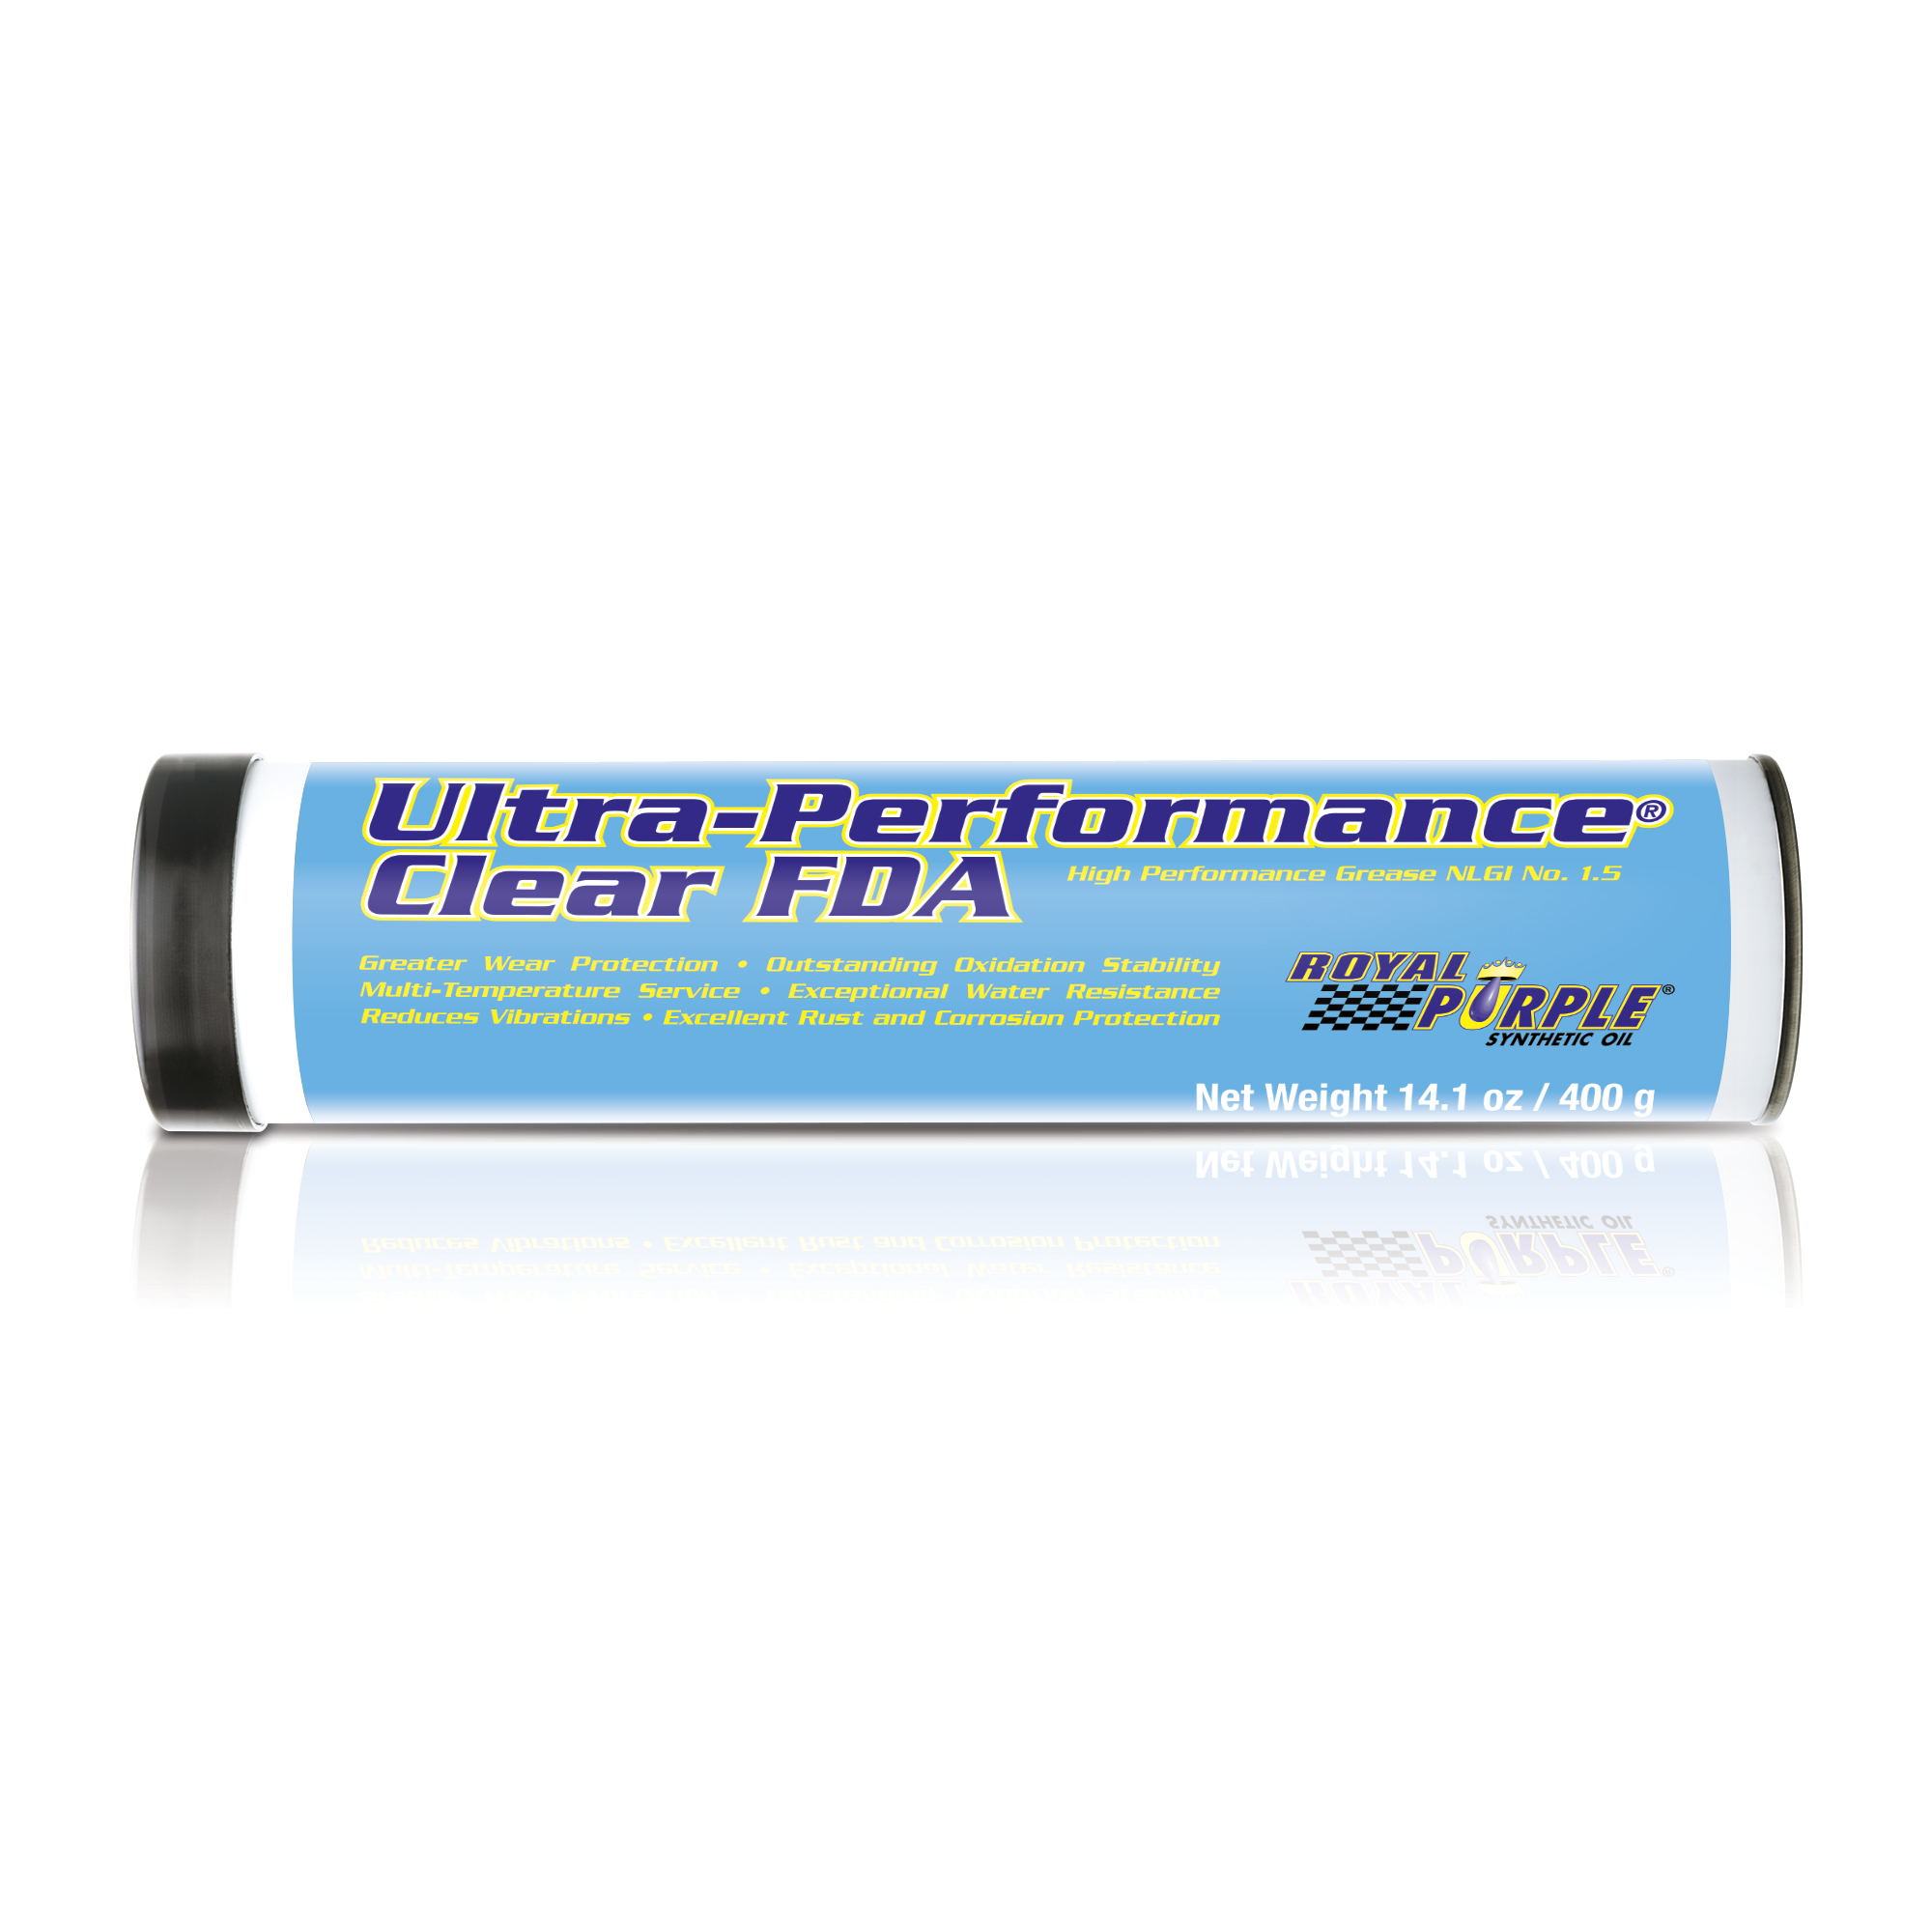 Royal Purple Ultra-Performance Clear FDA Grease 30 Cartridge Case 10047 Image